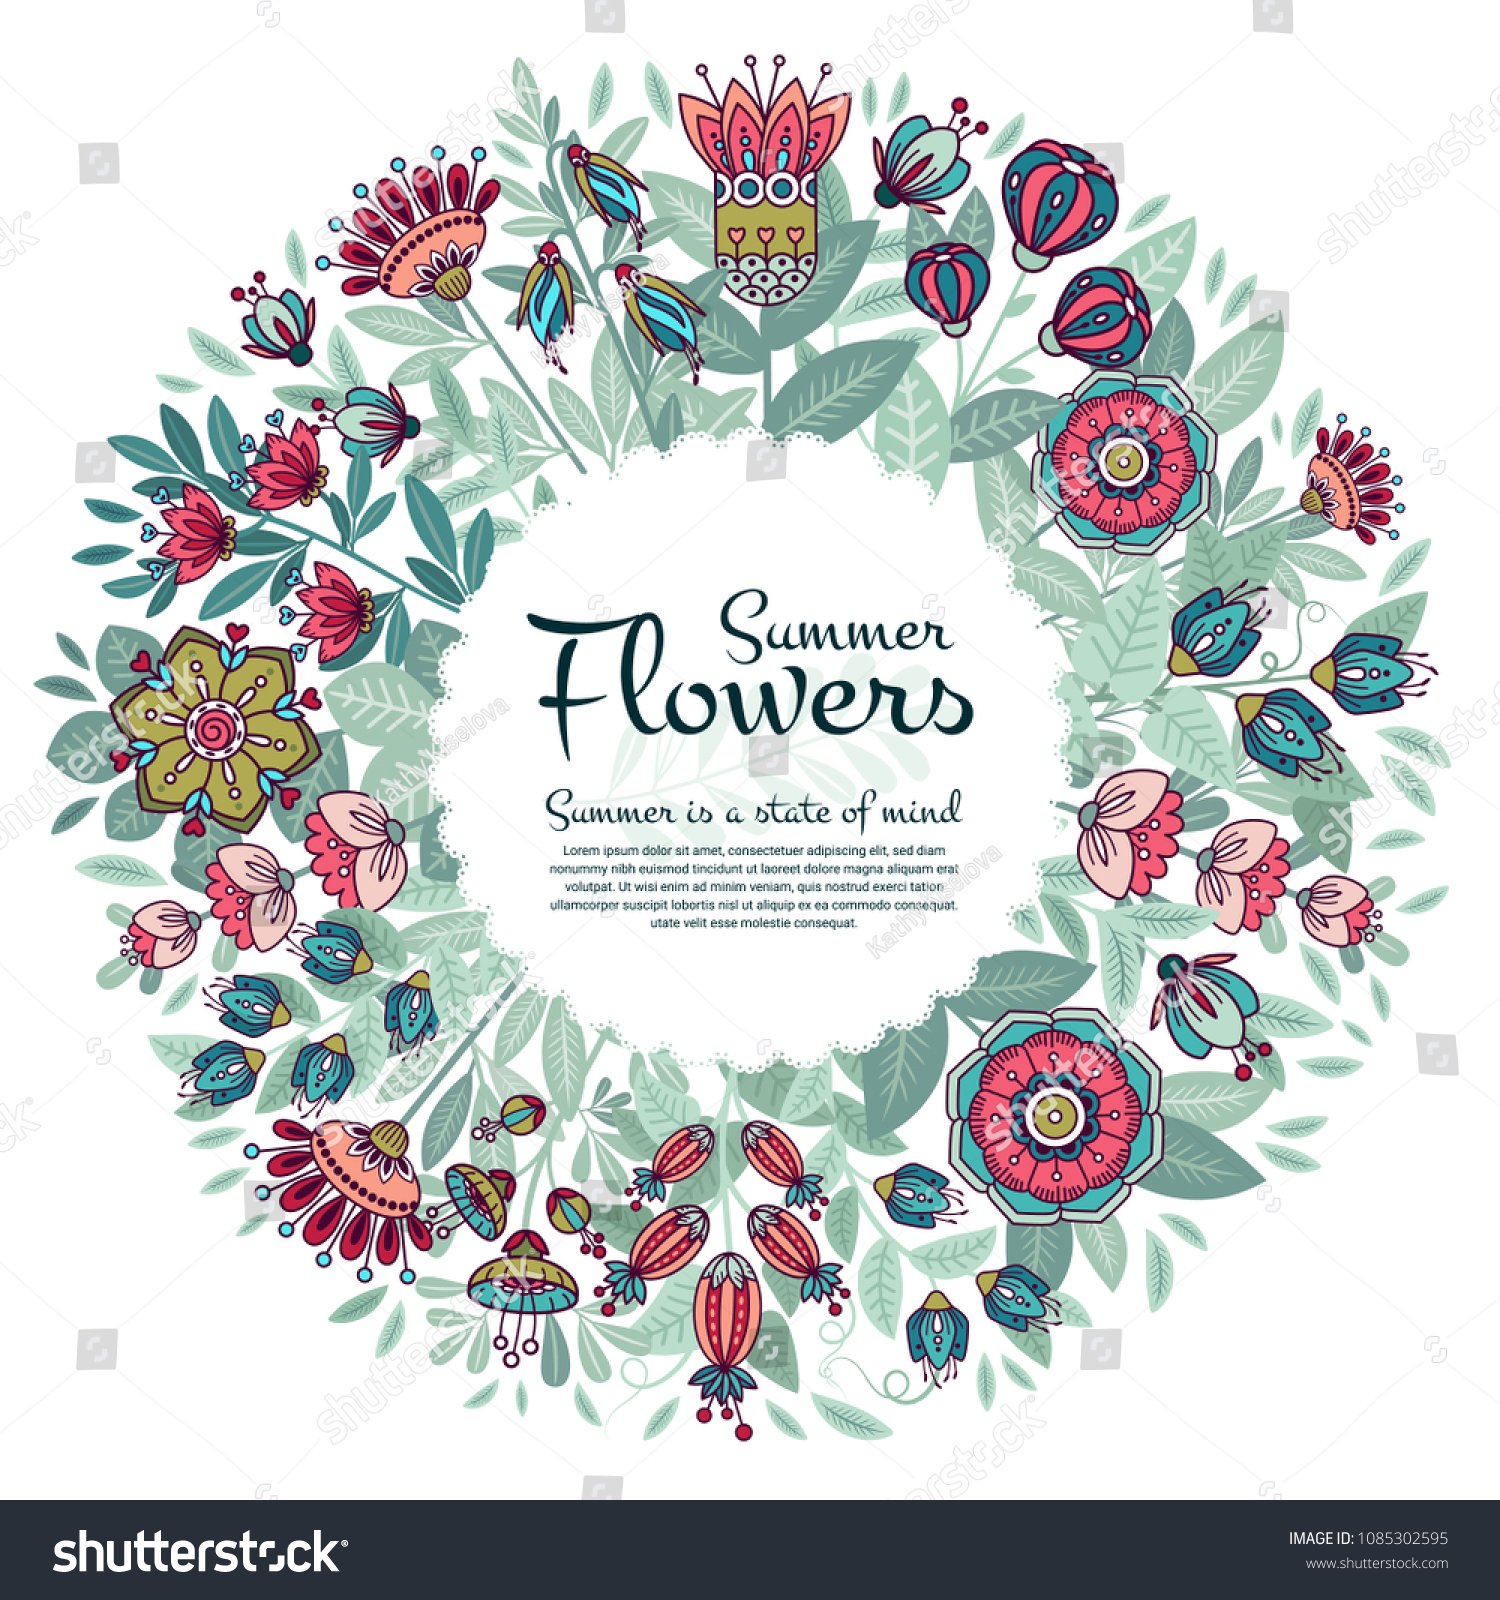 Summer Flowers Vector Illustration Cartoon Style Stock Vector Royalty Free